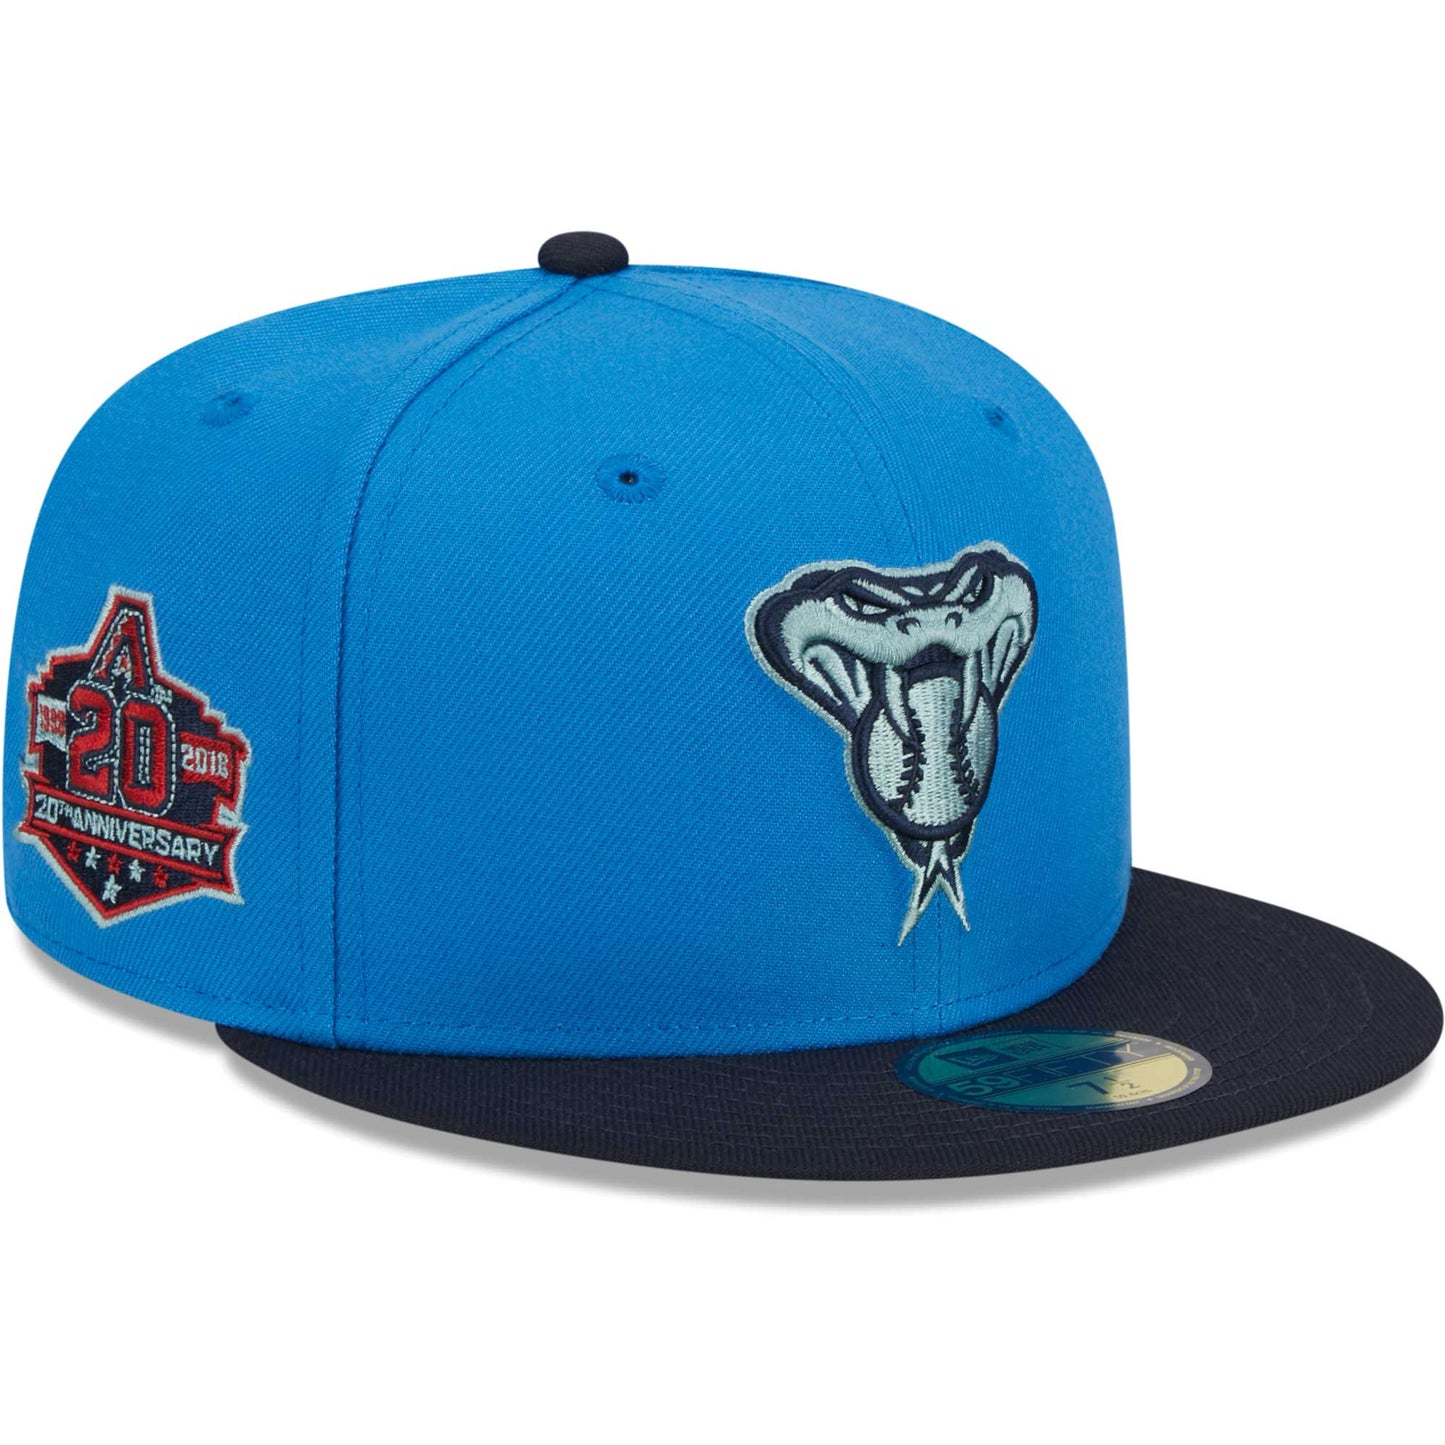 Arizona Diamondbacks New Era 59FIFTY Fitted Hat - Royal